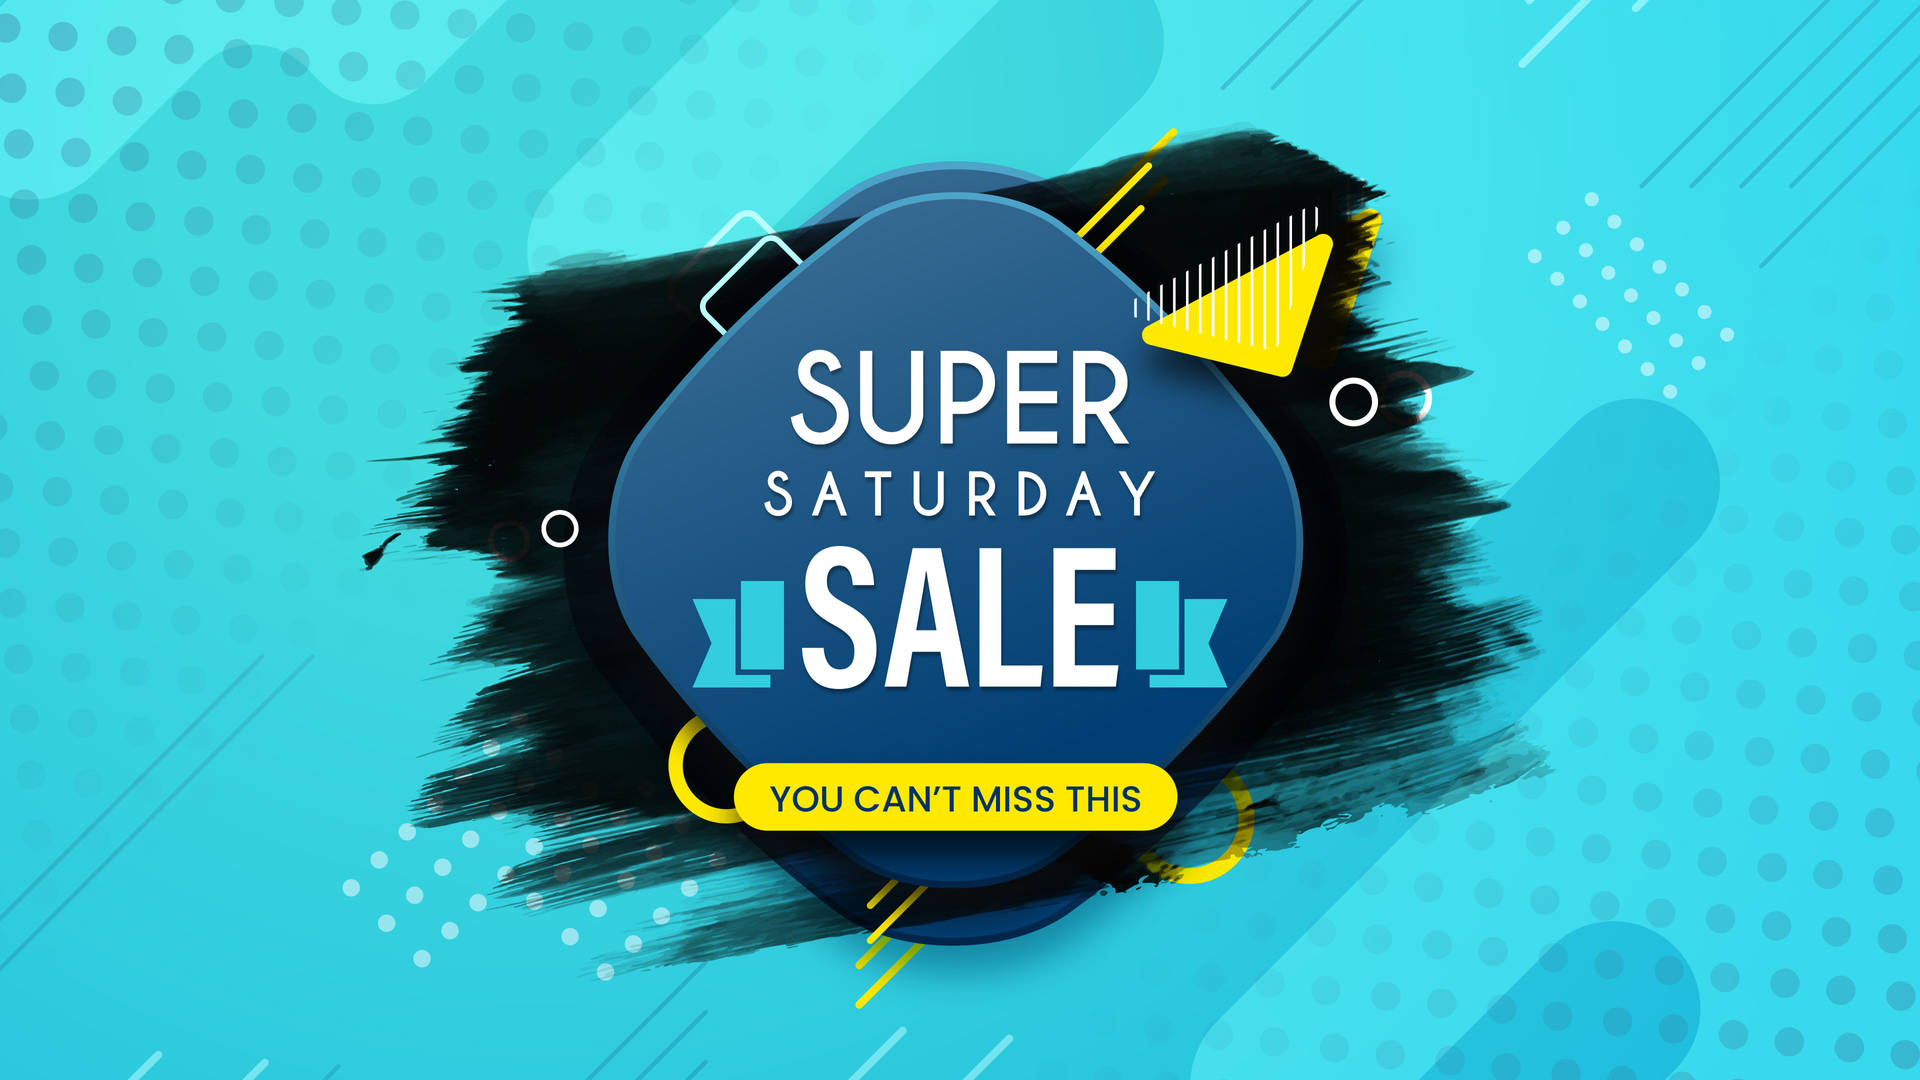 Unmissable Super Saturday Sale Background